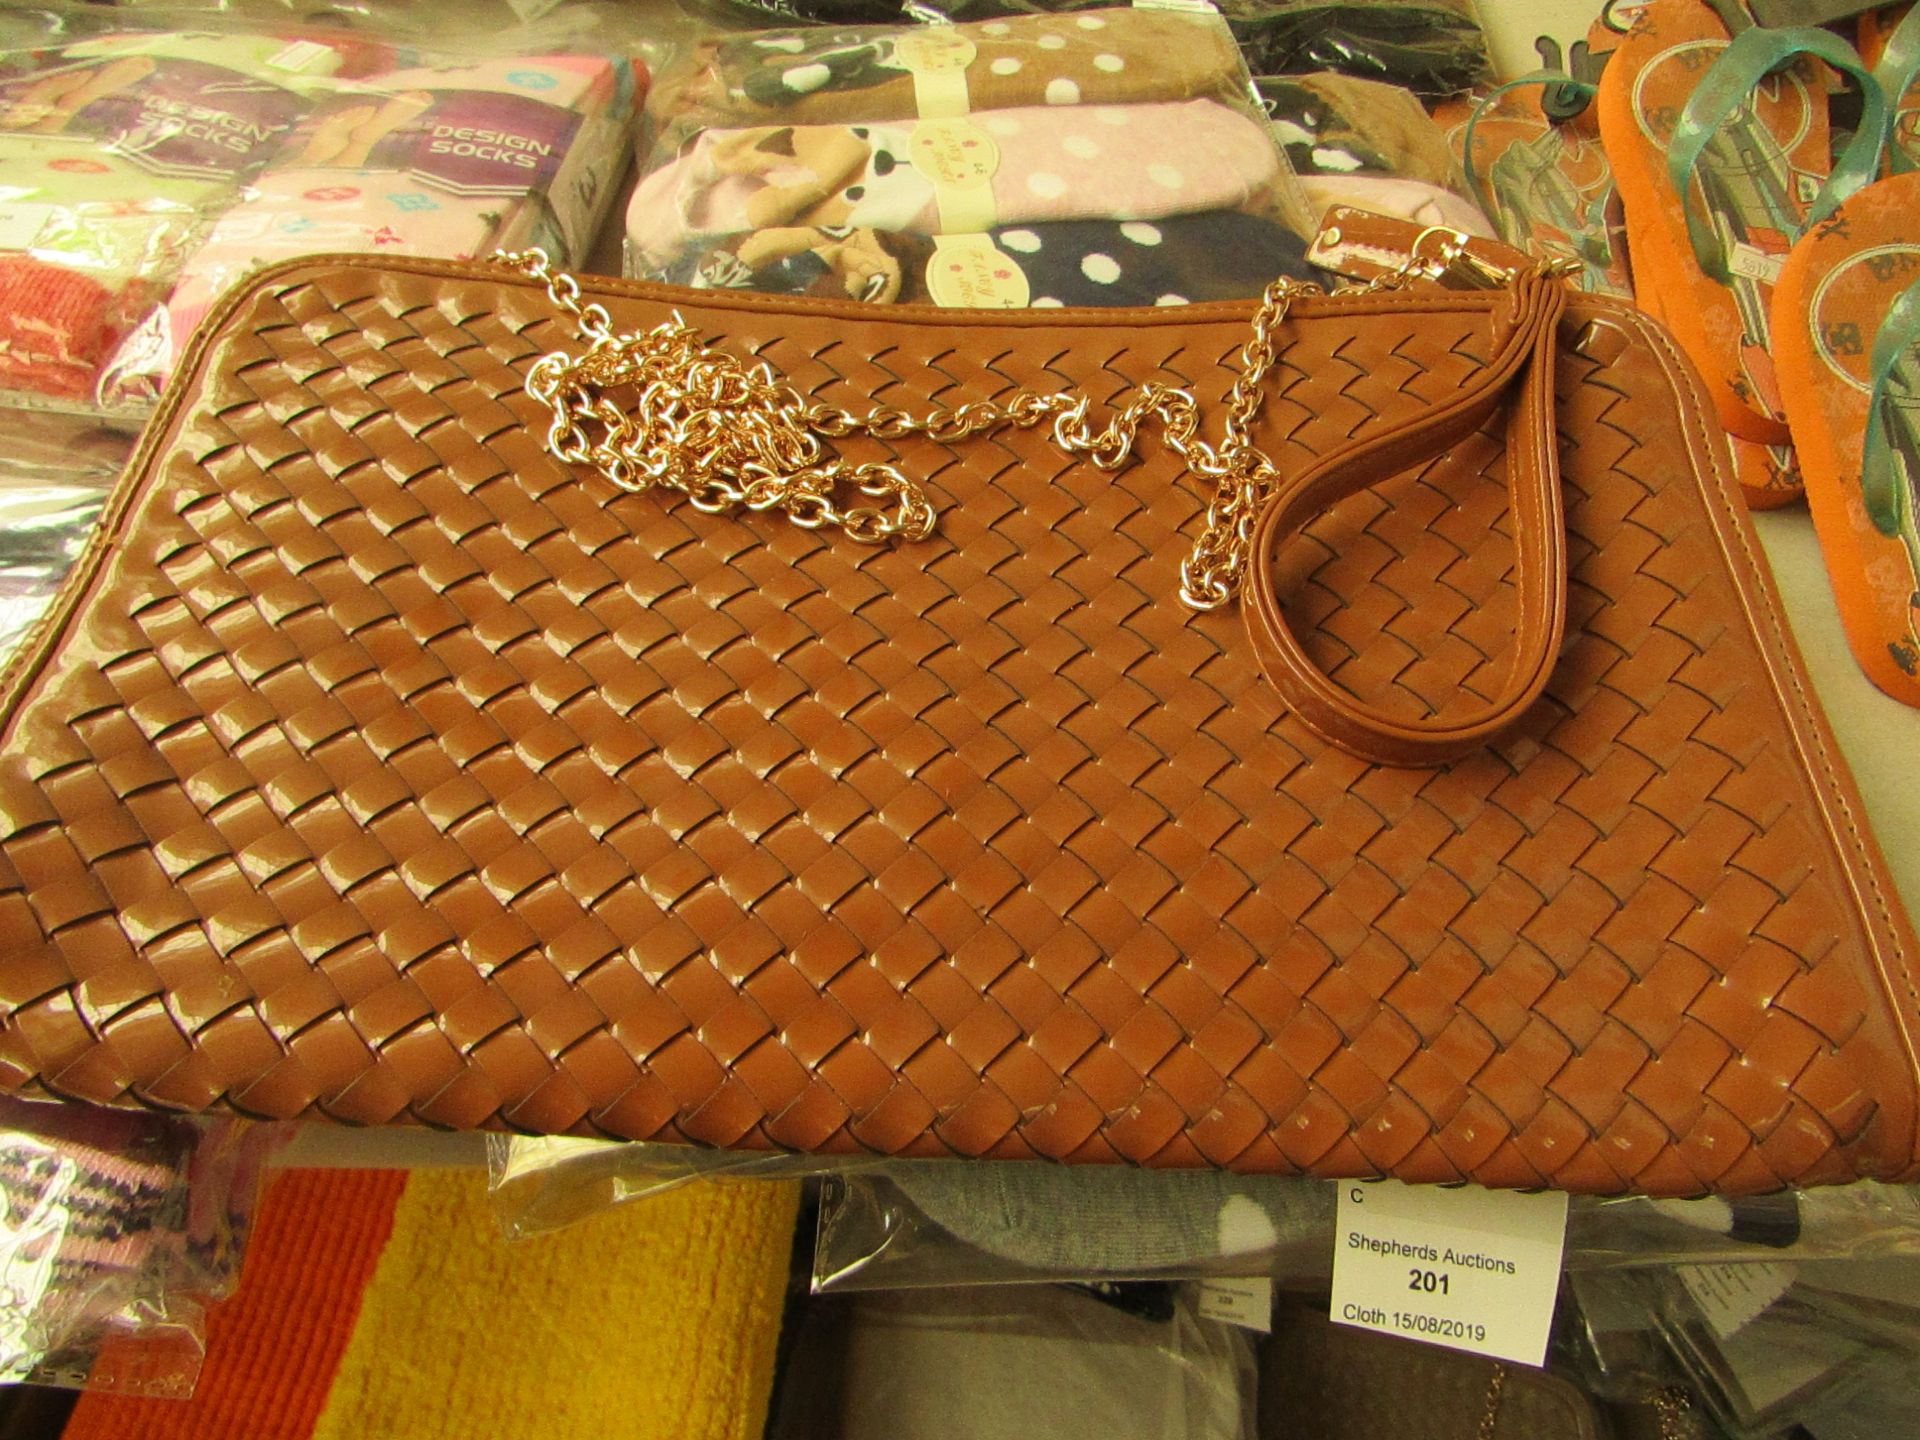 Ladies Large Handbag new & packaged (see image for design)